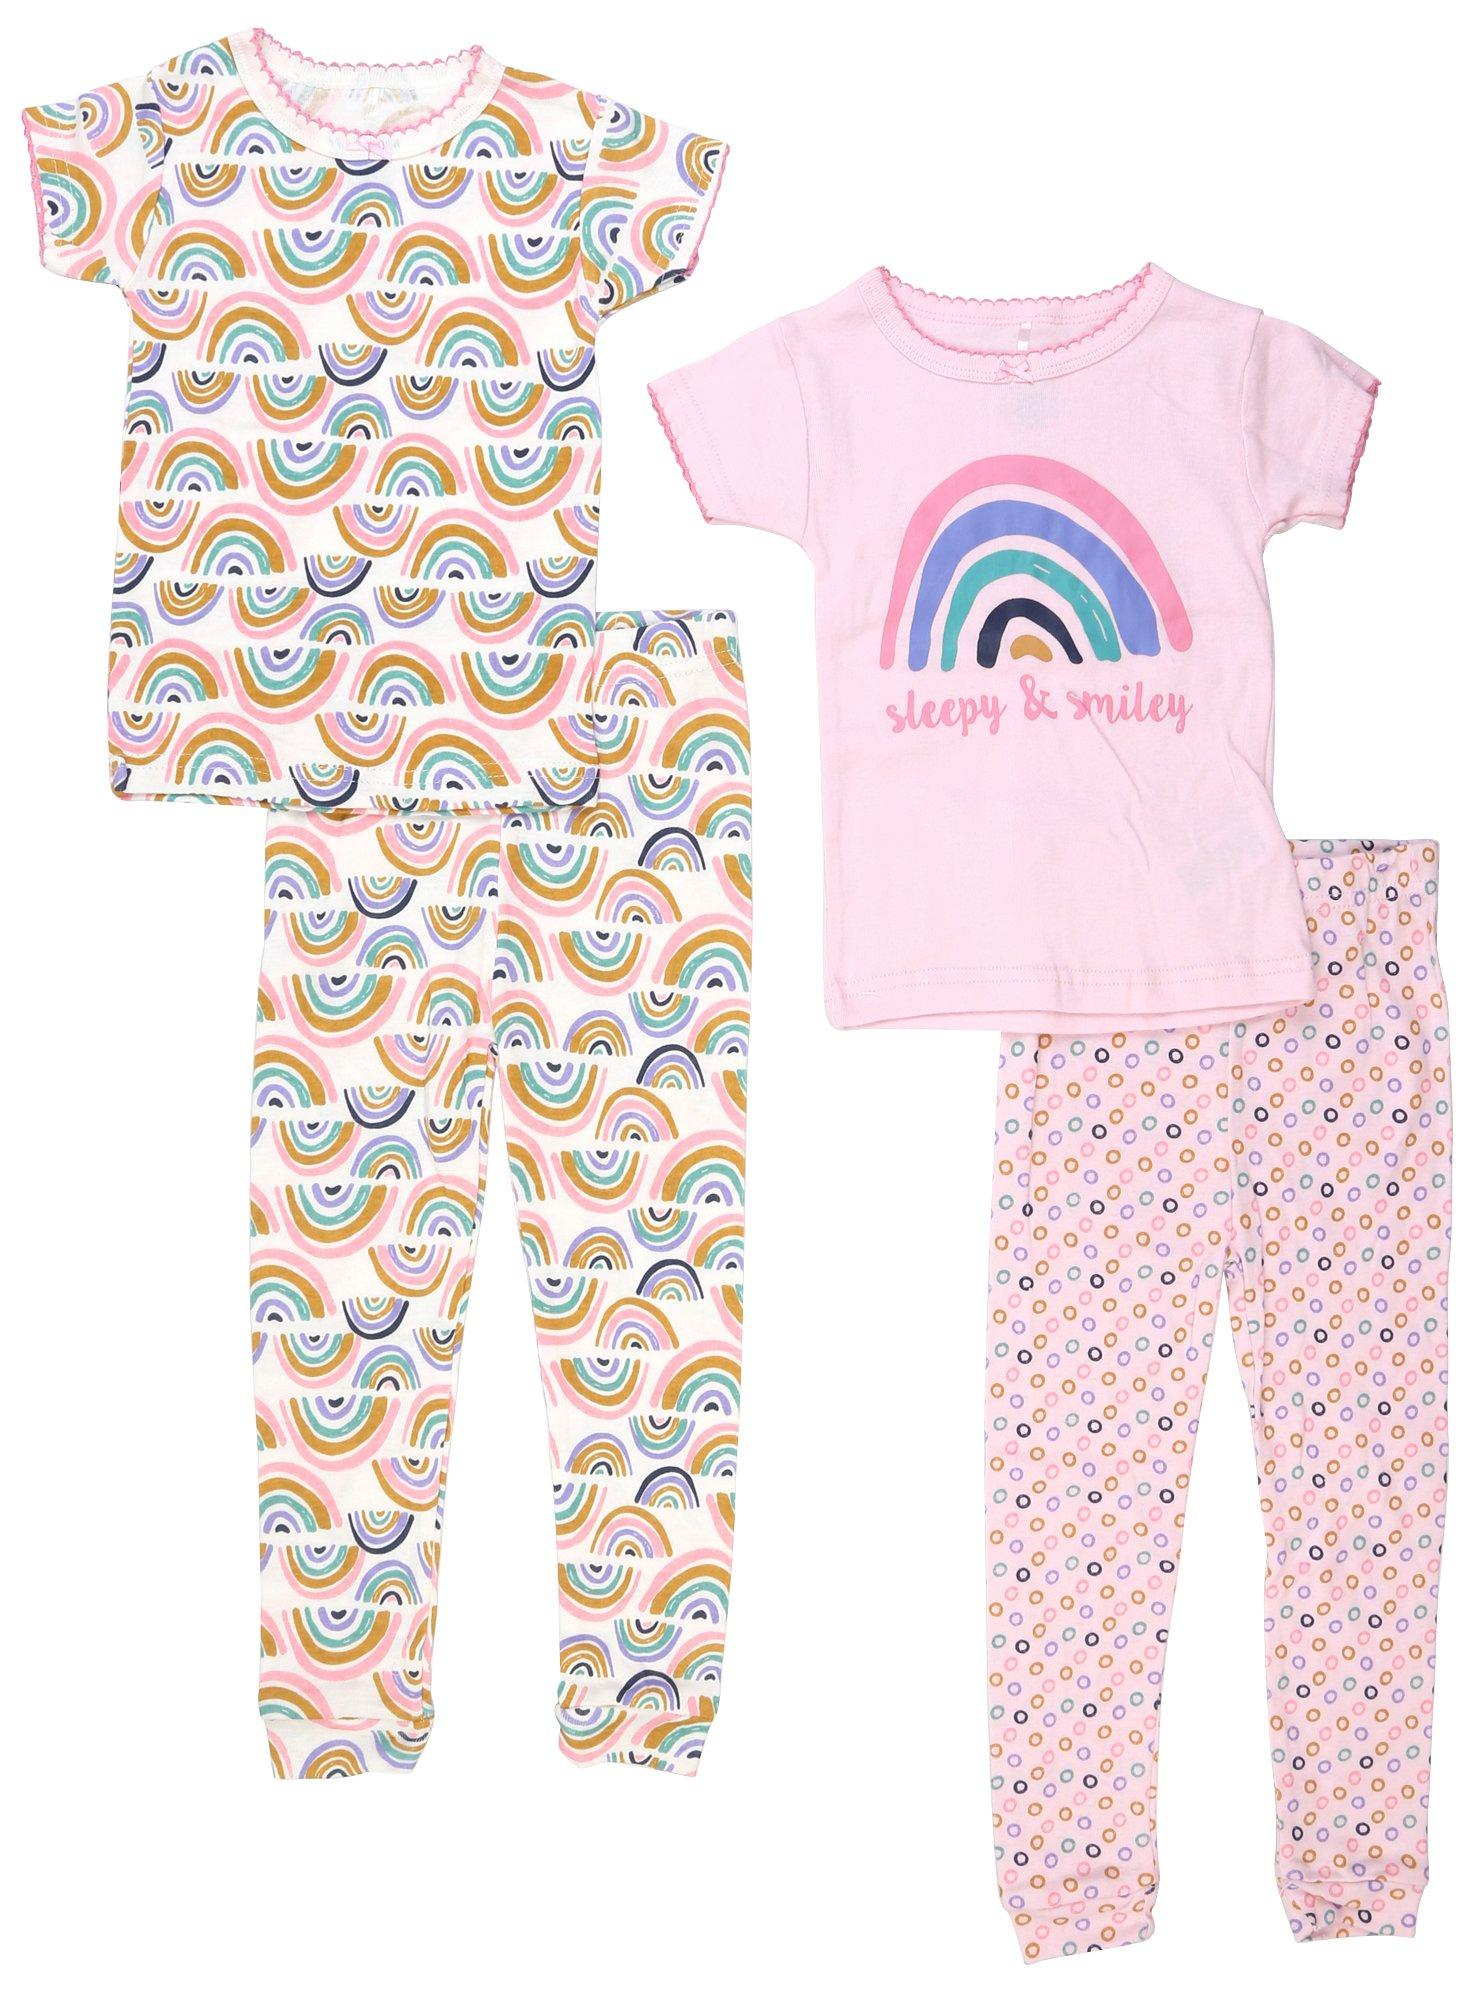 Cutie Pie Toddler Girls Sleepy & Smiley Rainbow